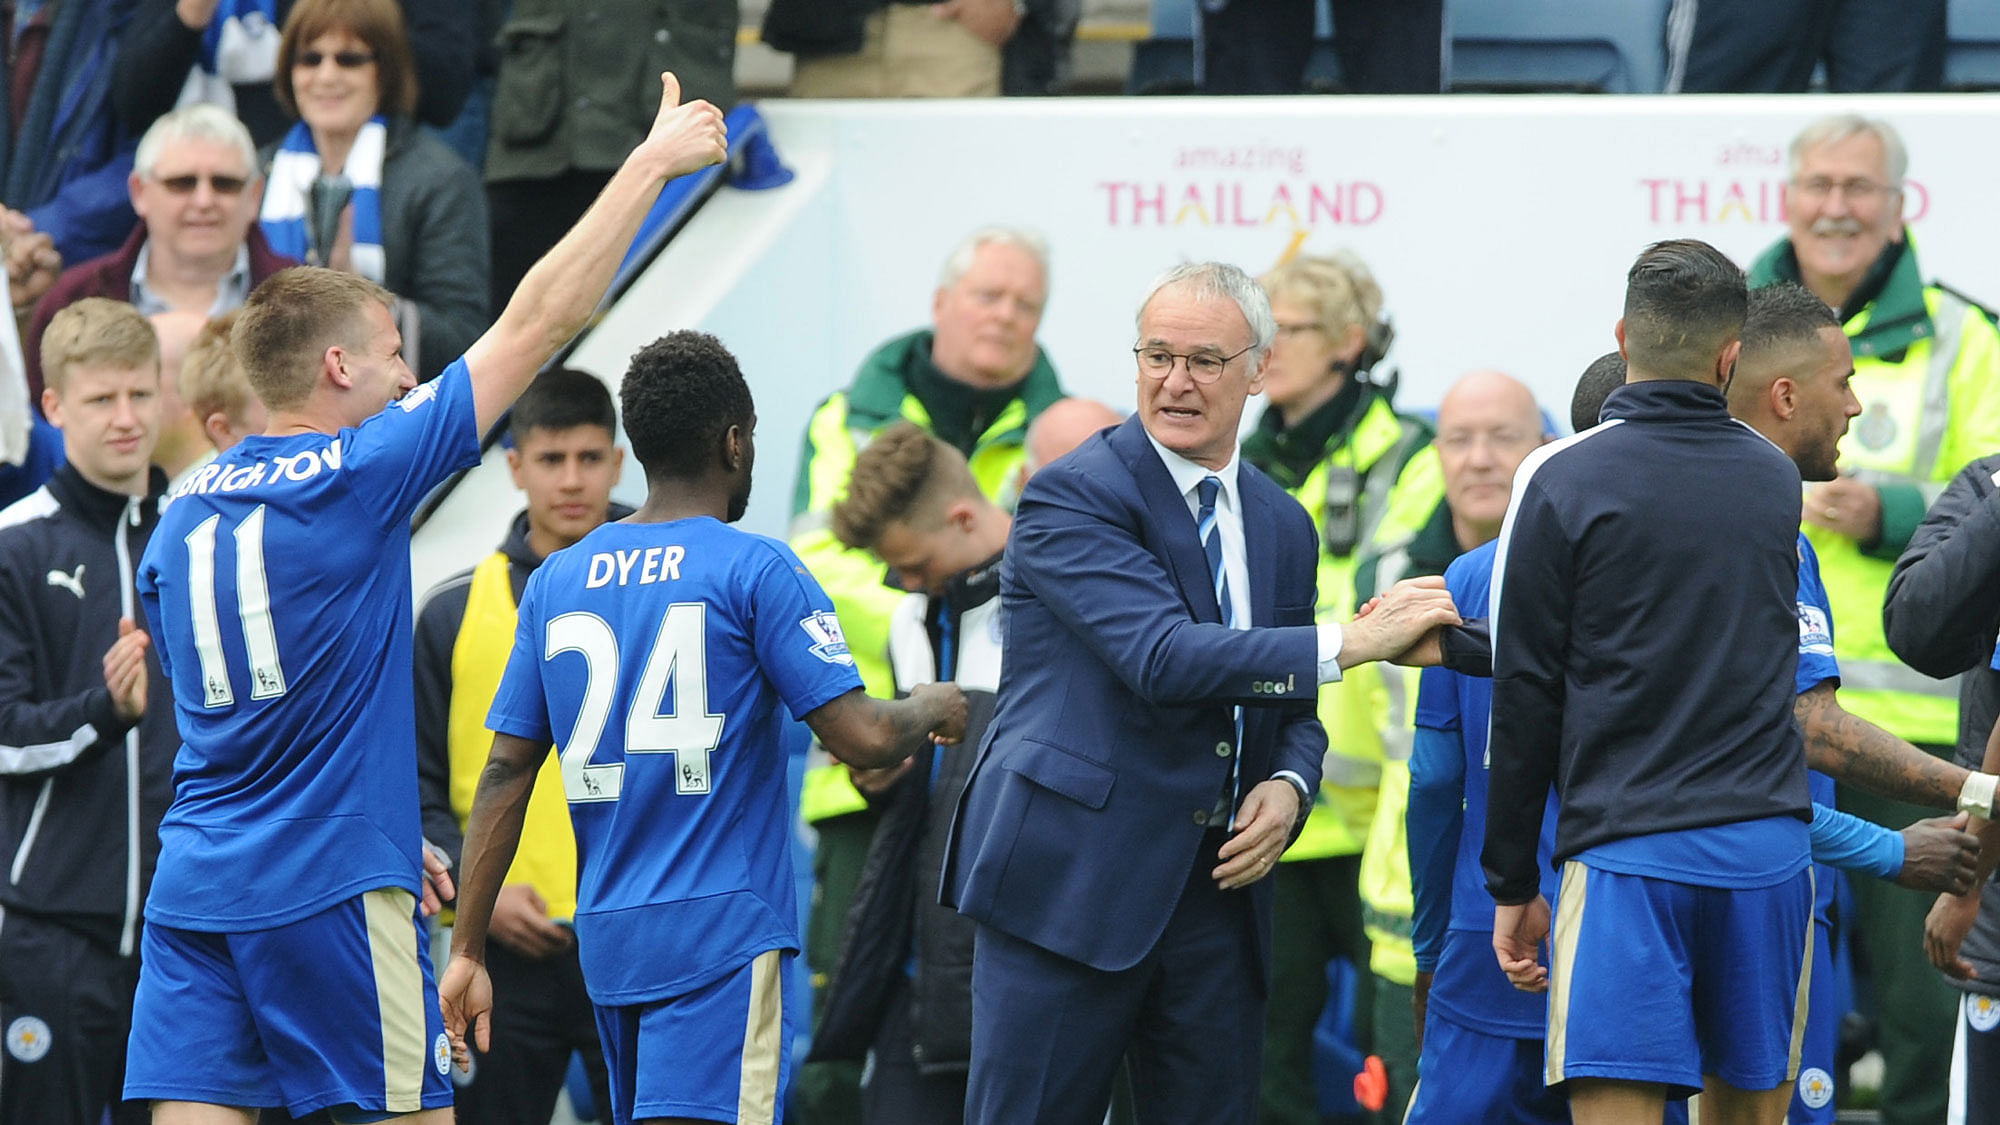 Leicester manager Claudio Ranieri, center, congratulates his players after beating Southampton 1-0. (Photo: AP)